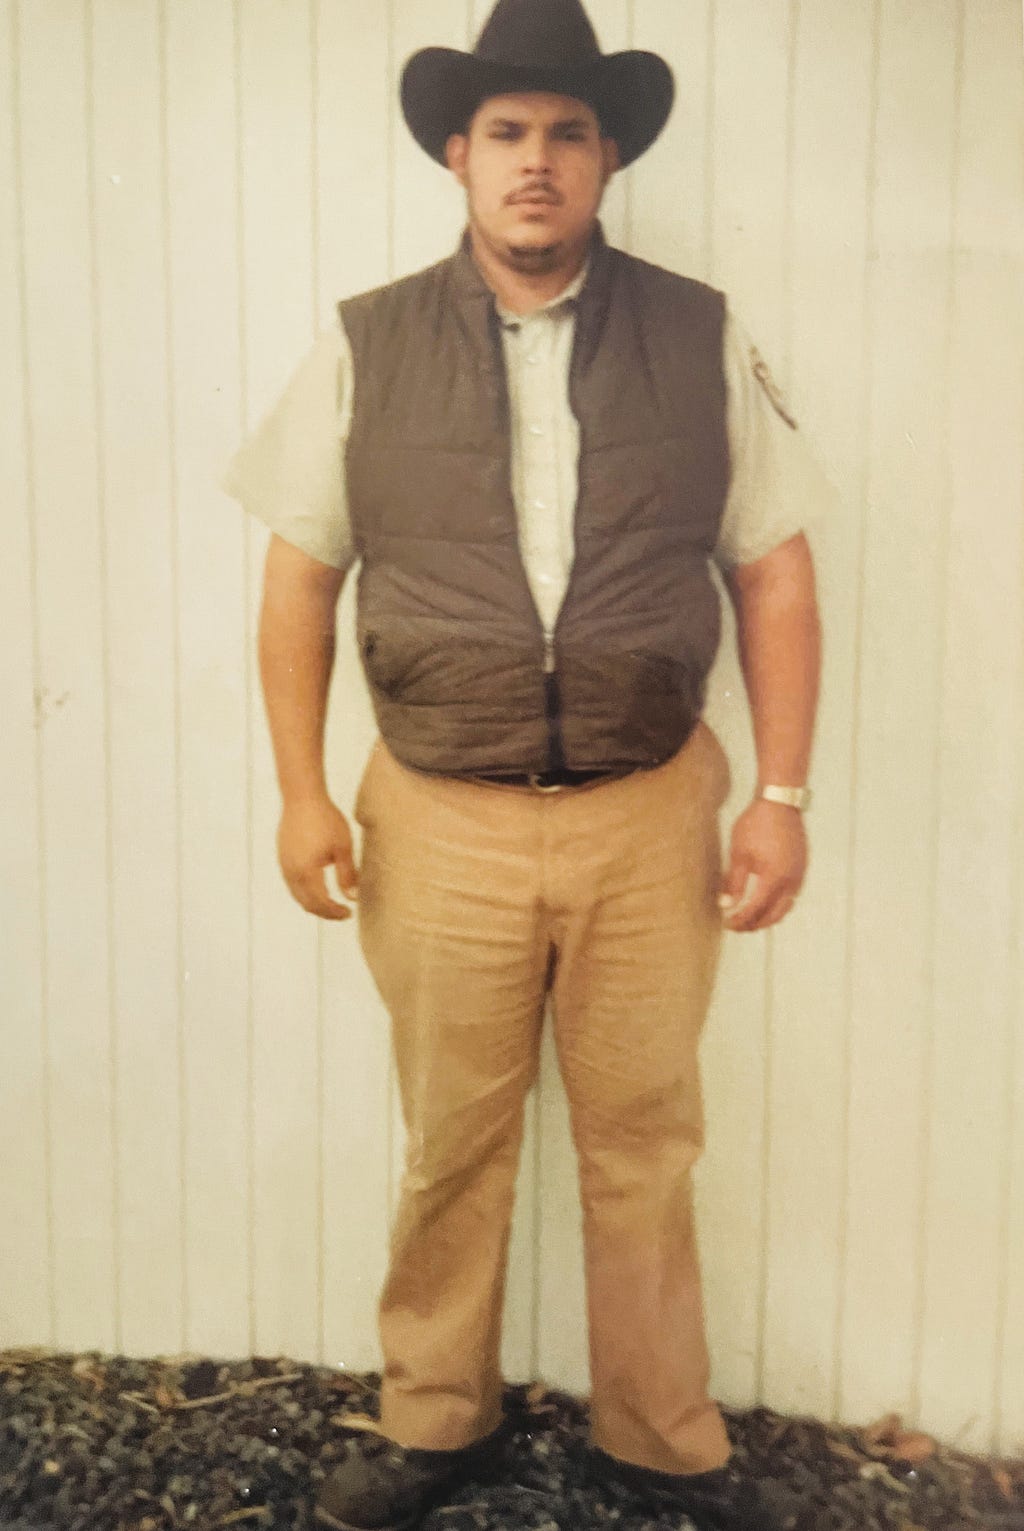 Robert Luna as a young man. He’s wearing a black cowboy hat, brown vest, and USFWS uniform.